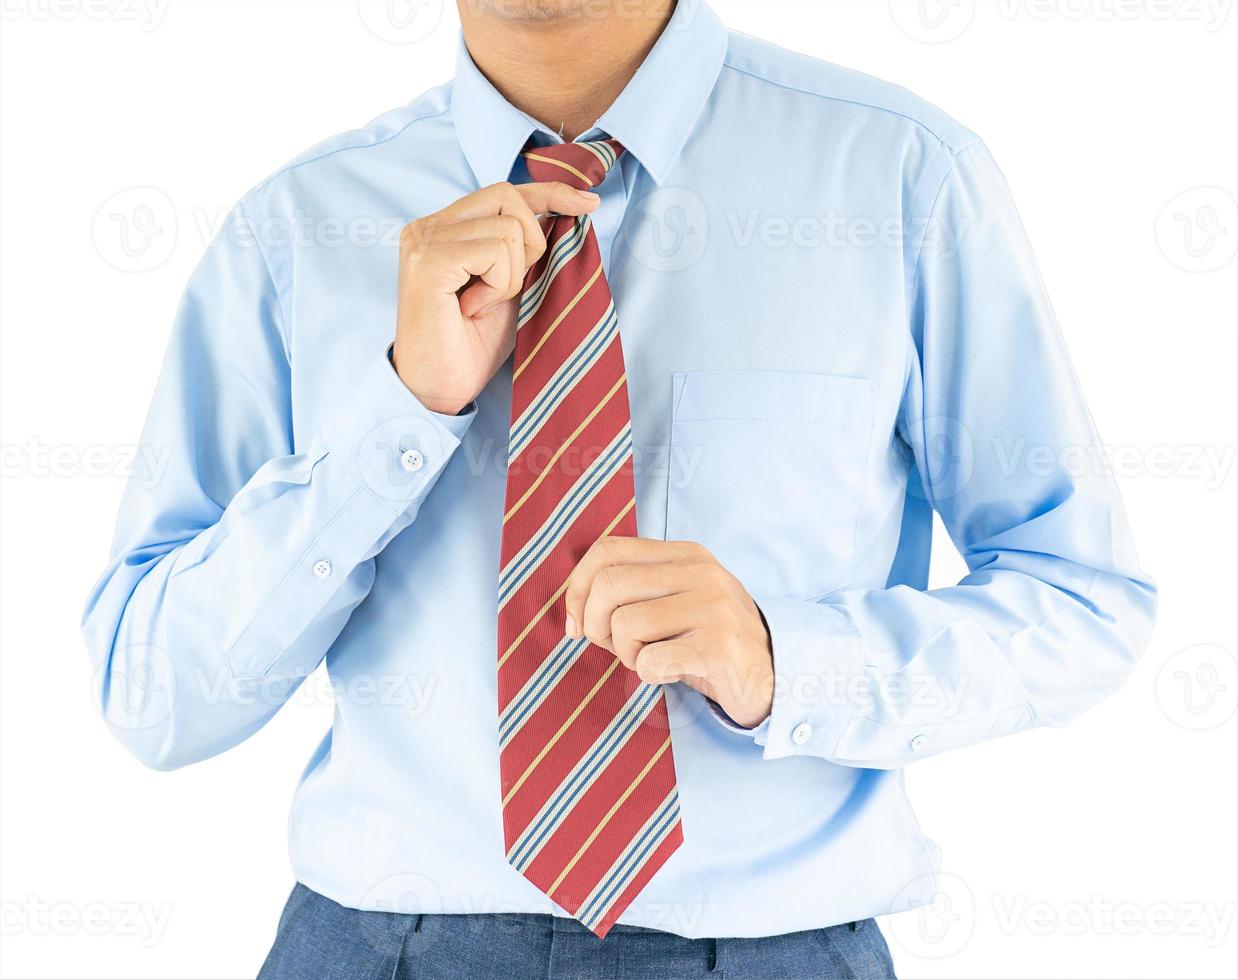 mannetje vervelend blauw overhemd en rood stropdas met knipsel pad foto